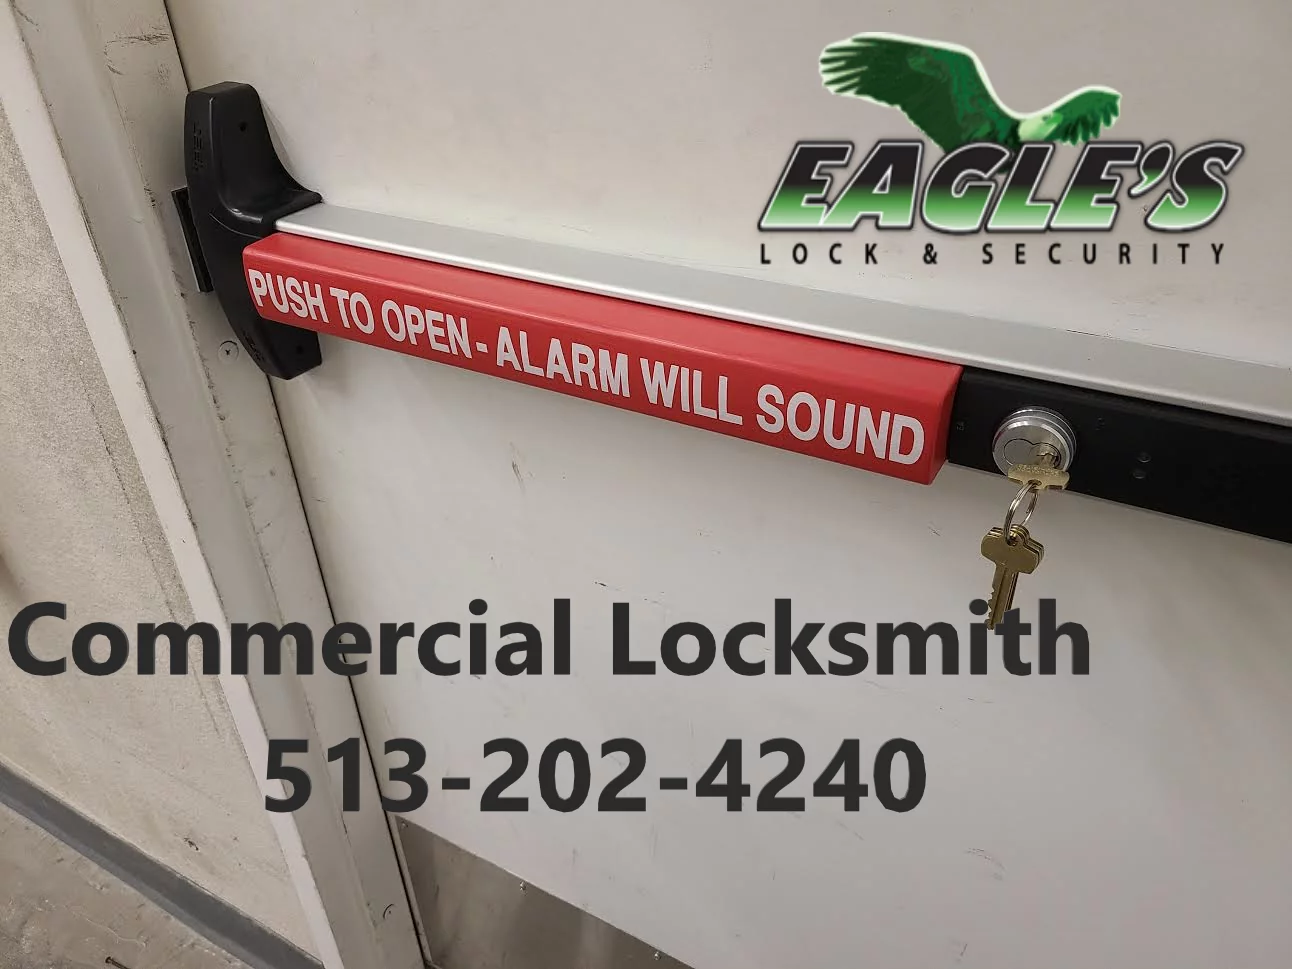 Locksmith Commercial Services in Cincinnati Ohio